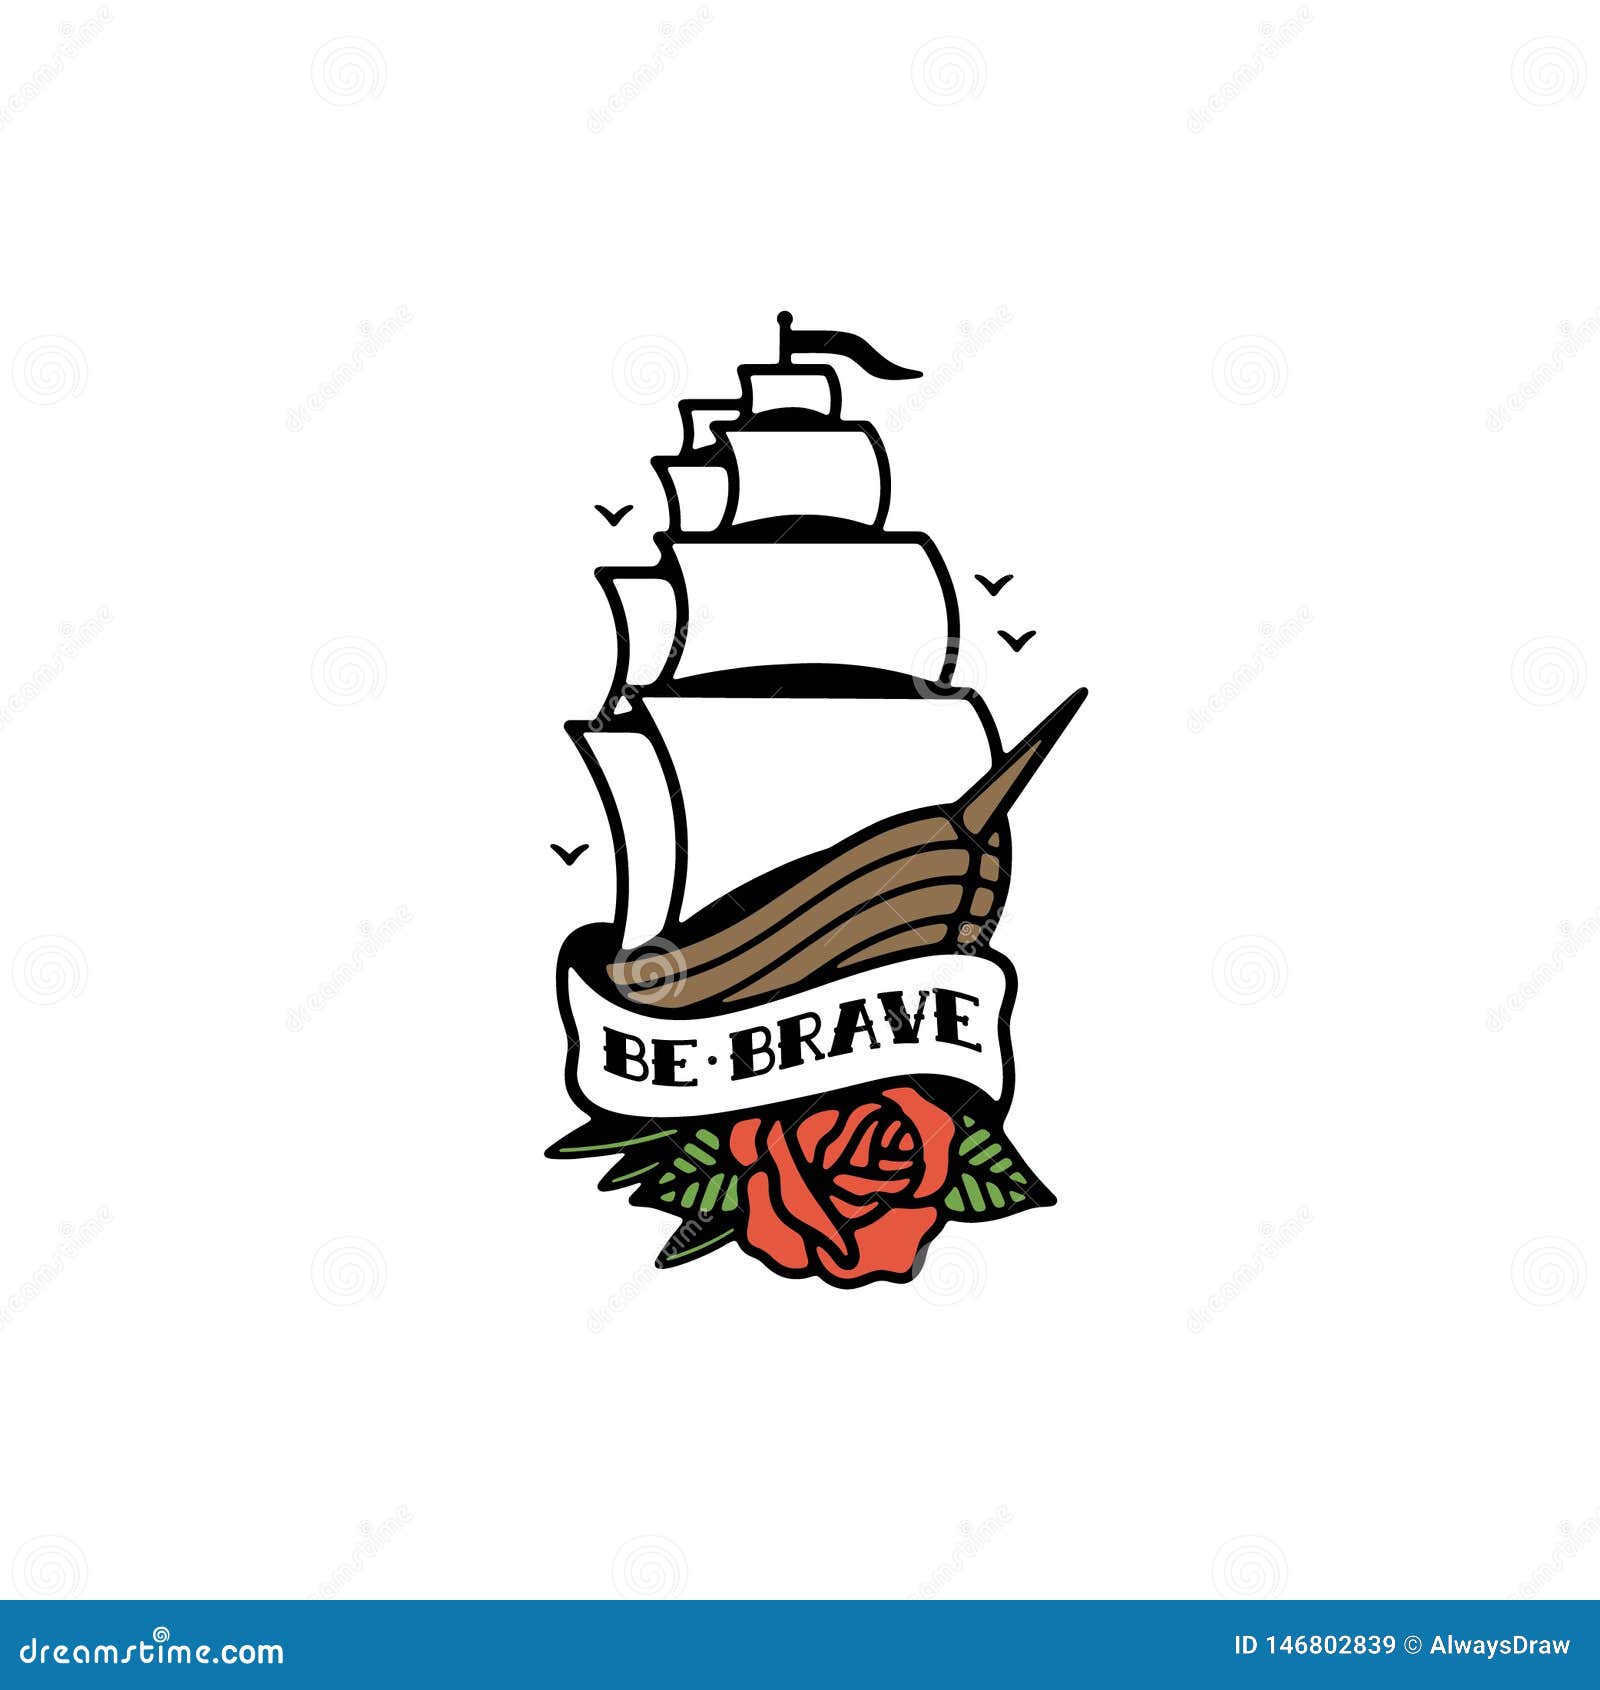 Ship n flower - American traditional tattoo design by drawmort on DeviantArt